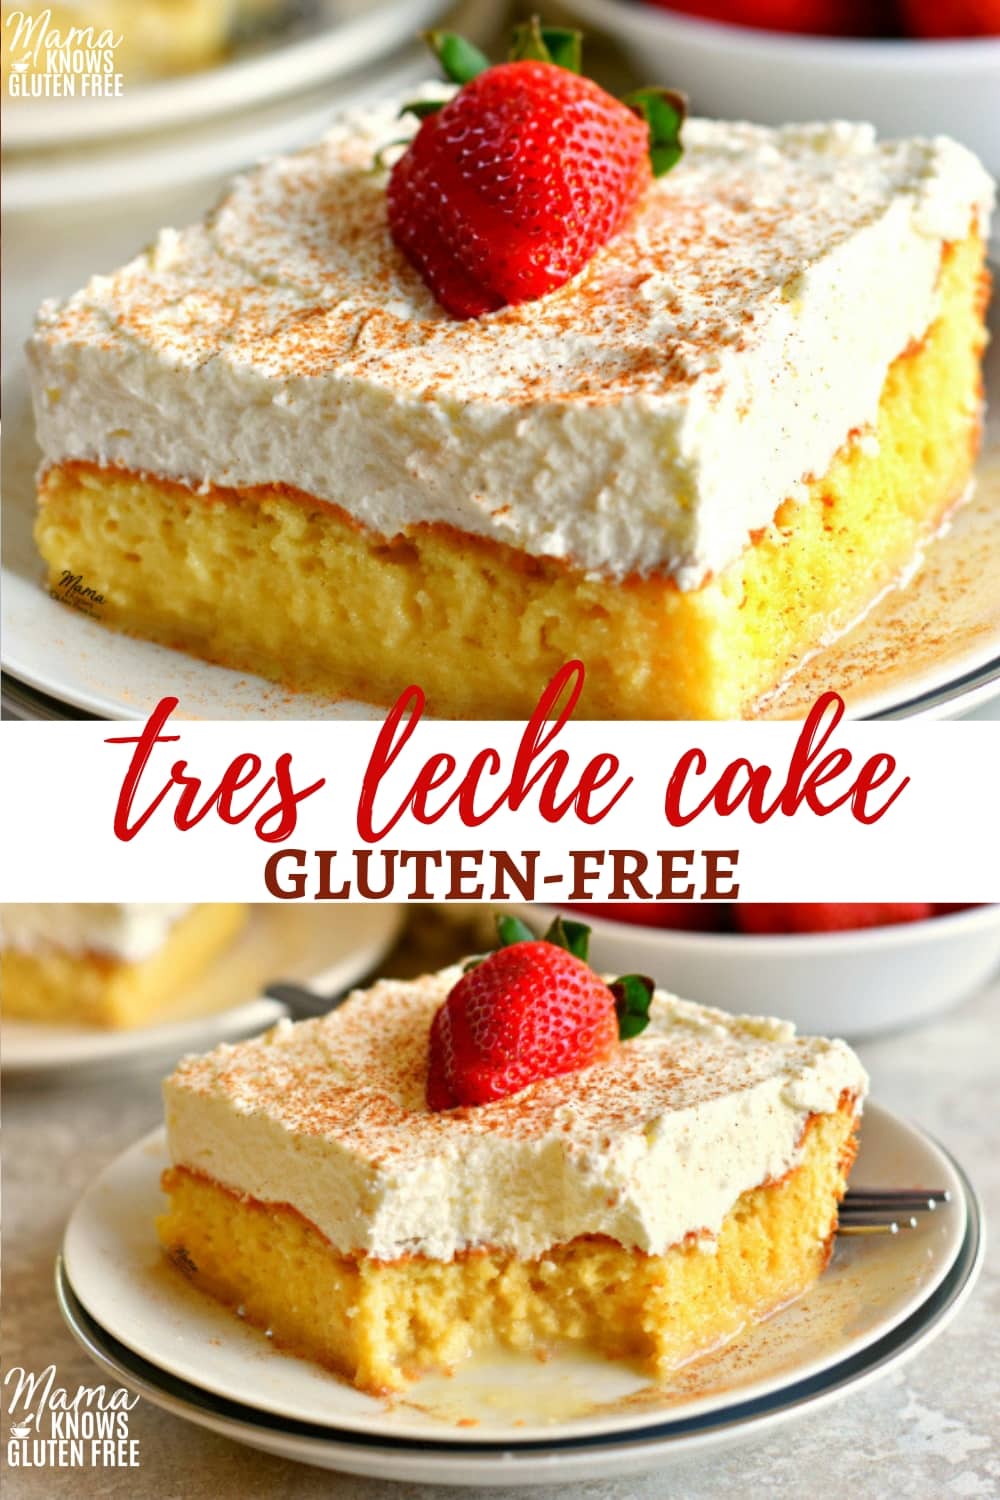 gluten-free tres leche cake Pinterest pin 1-a